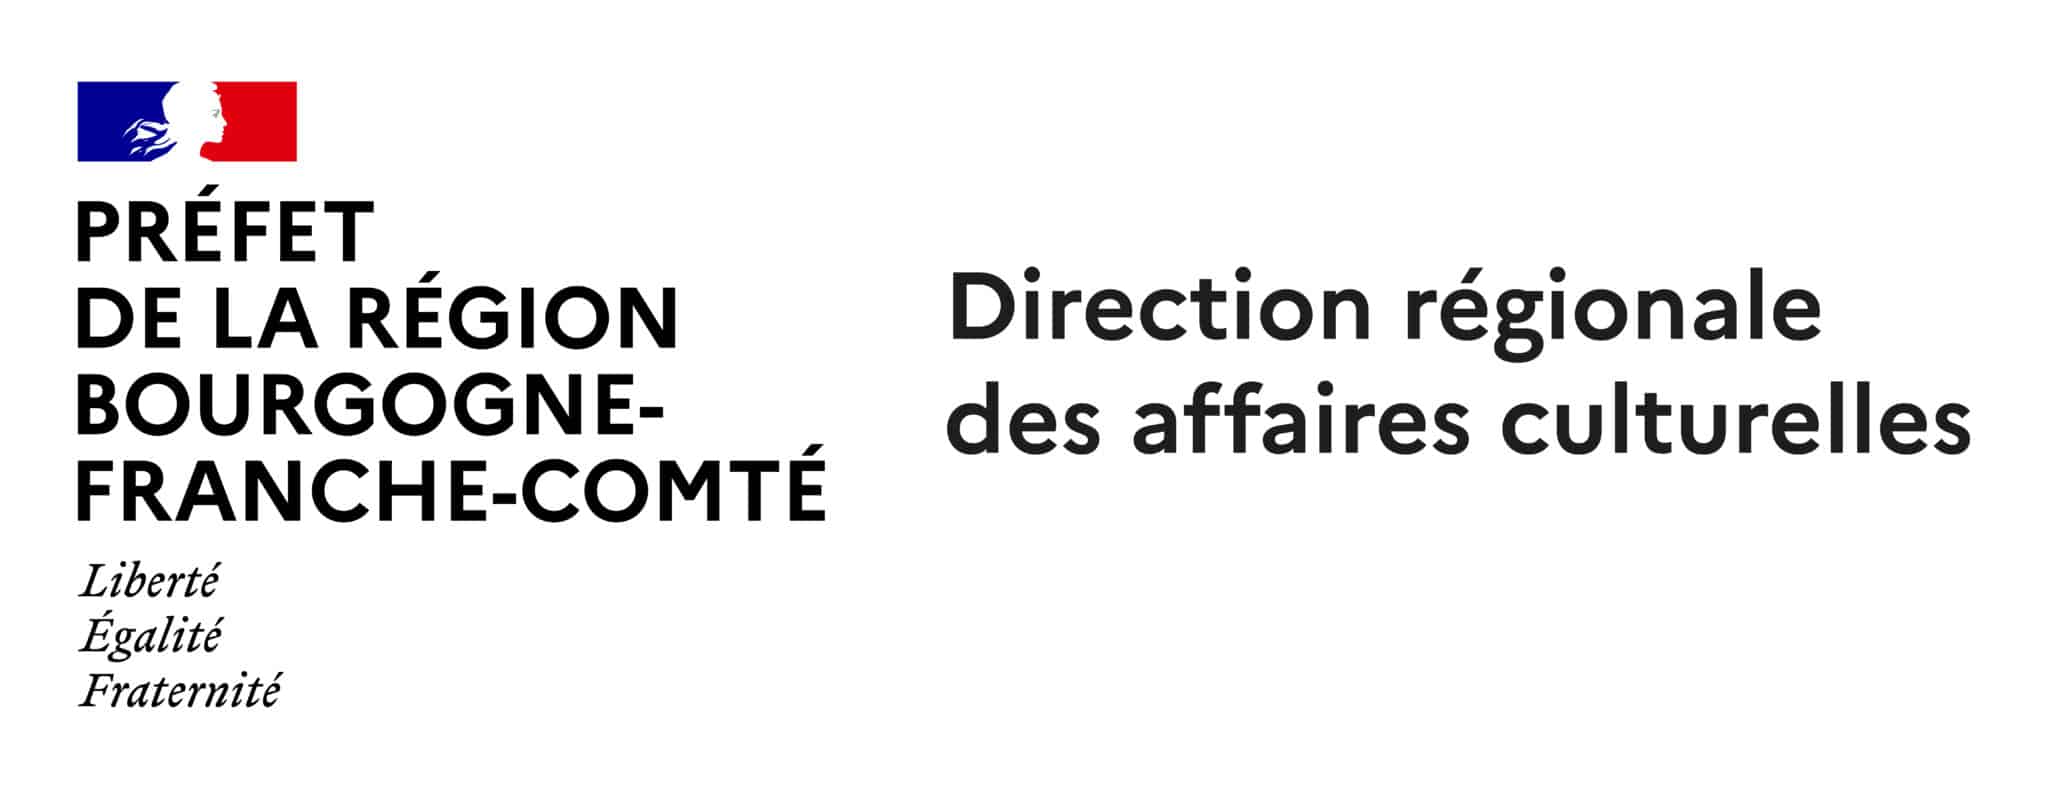 Logo_prefet-region_mention-drac_rvb